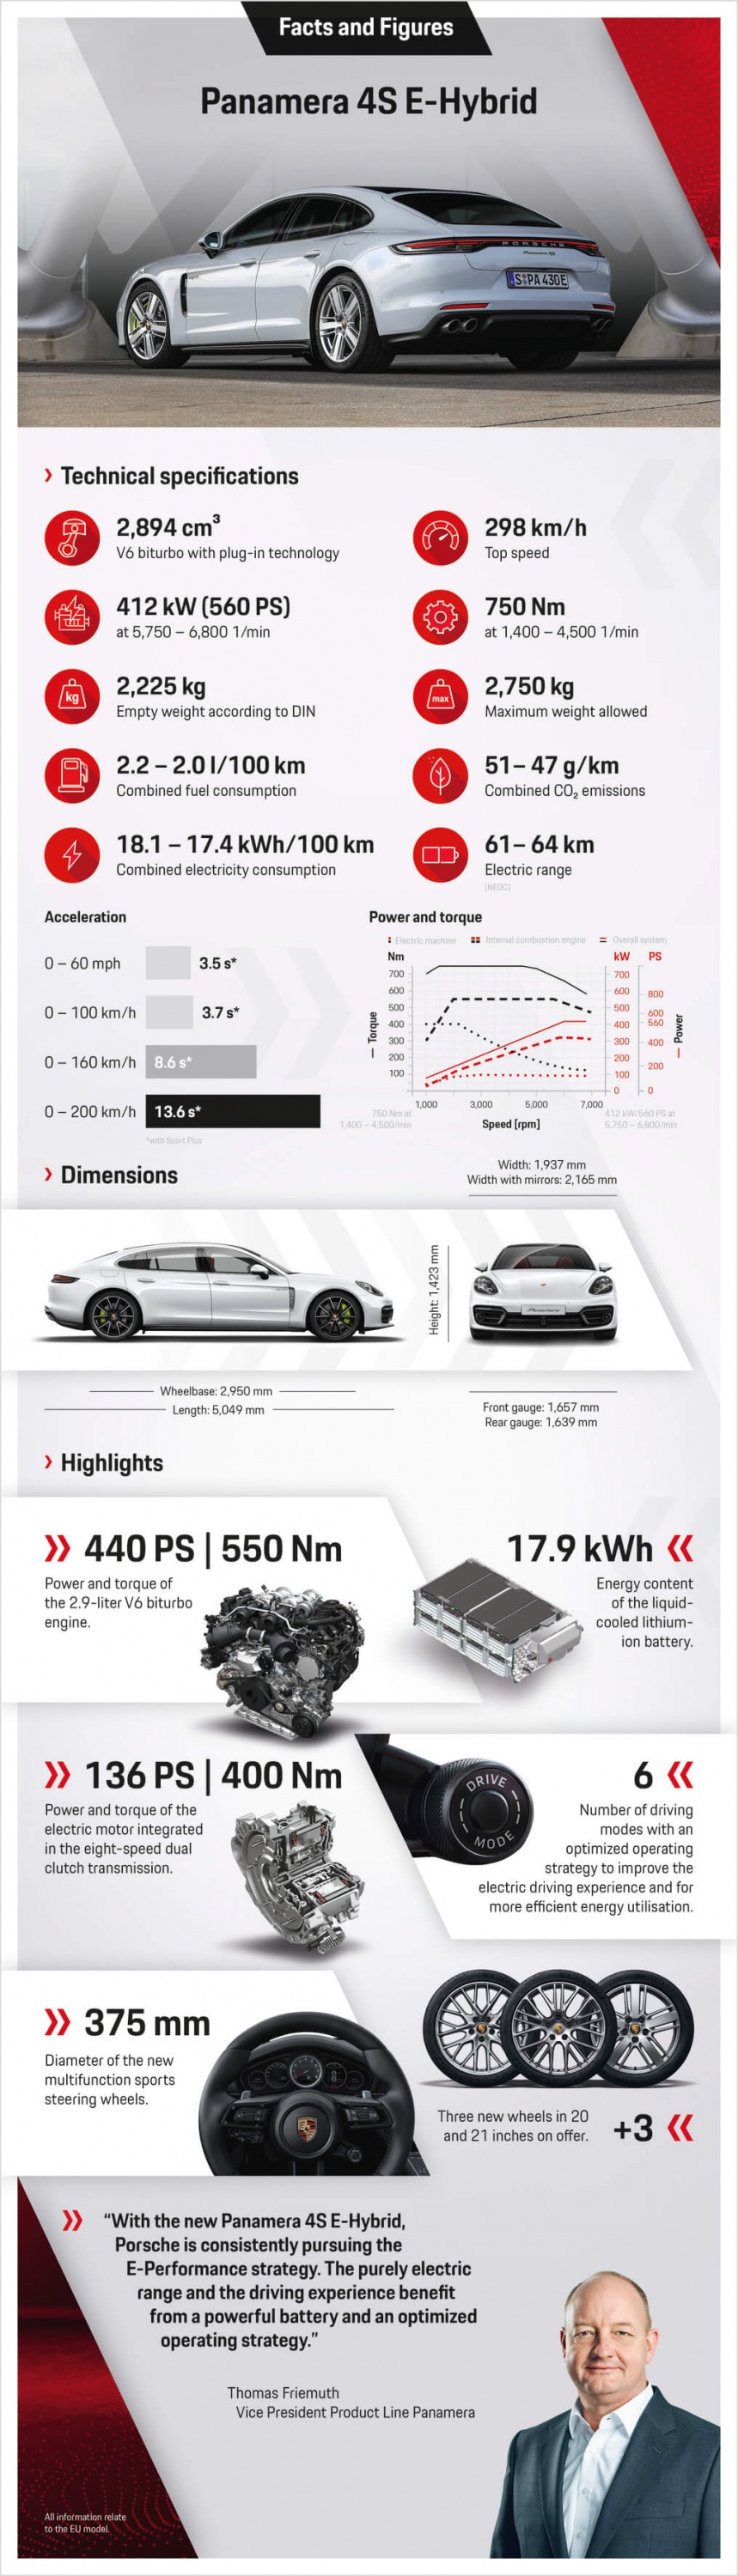 Porsche_Panamera_4S_E-Hybrid_Facts_and_Figures_a4.jpg